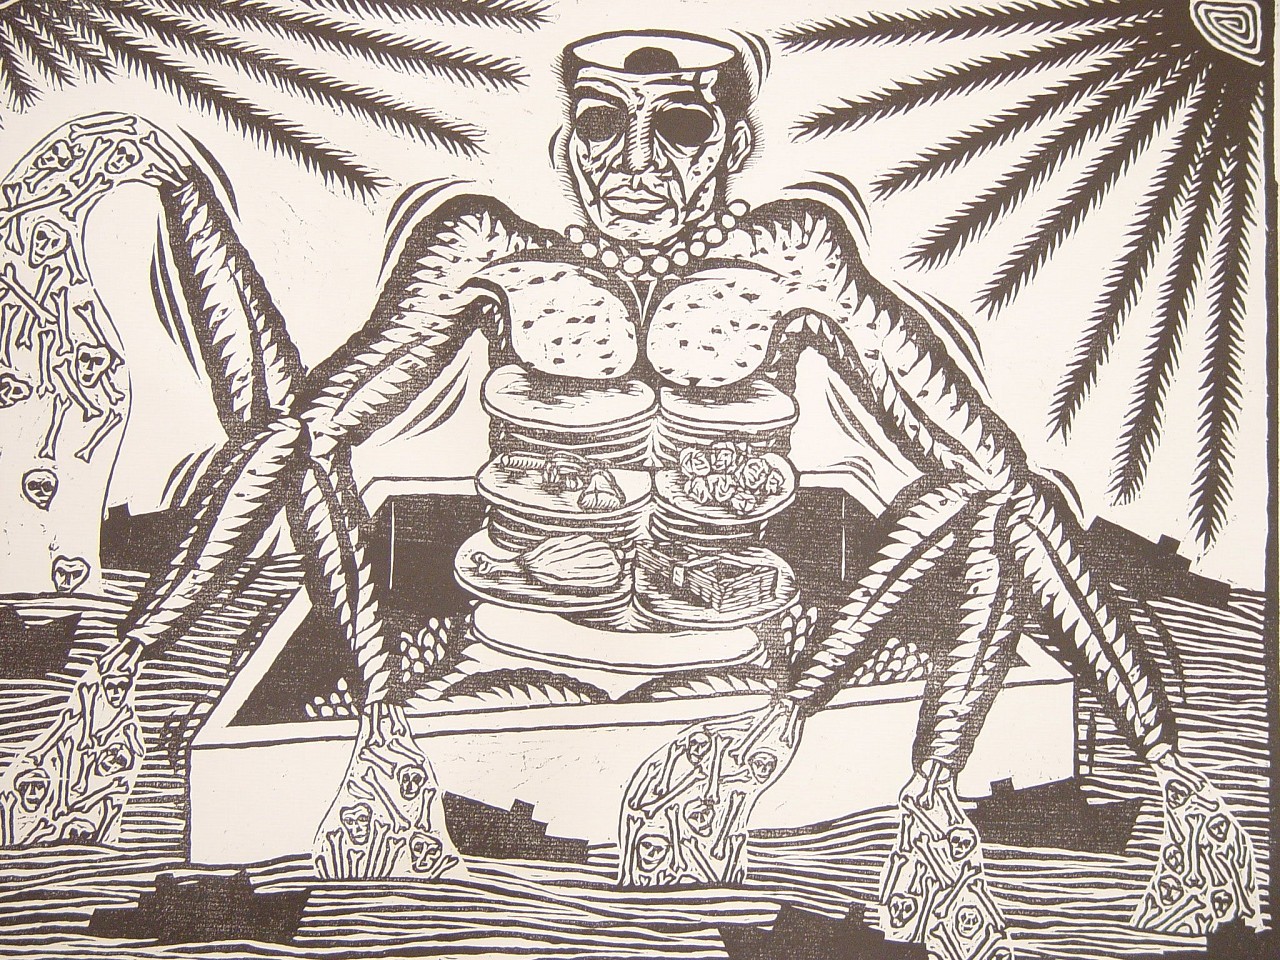 IBRAHIM MIRANDA, Untitled- Esqueletos, 1997
Etching, 16 7/8 x 21 1/4 in. (43 x 54 cm)
Ed: P.A
MI-O-0002